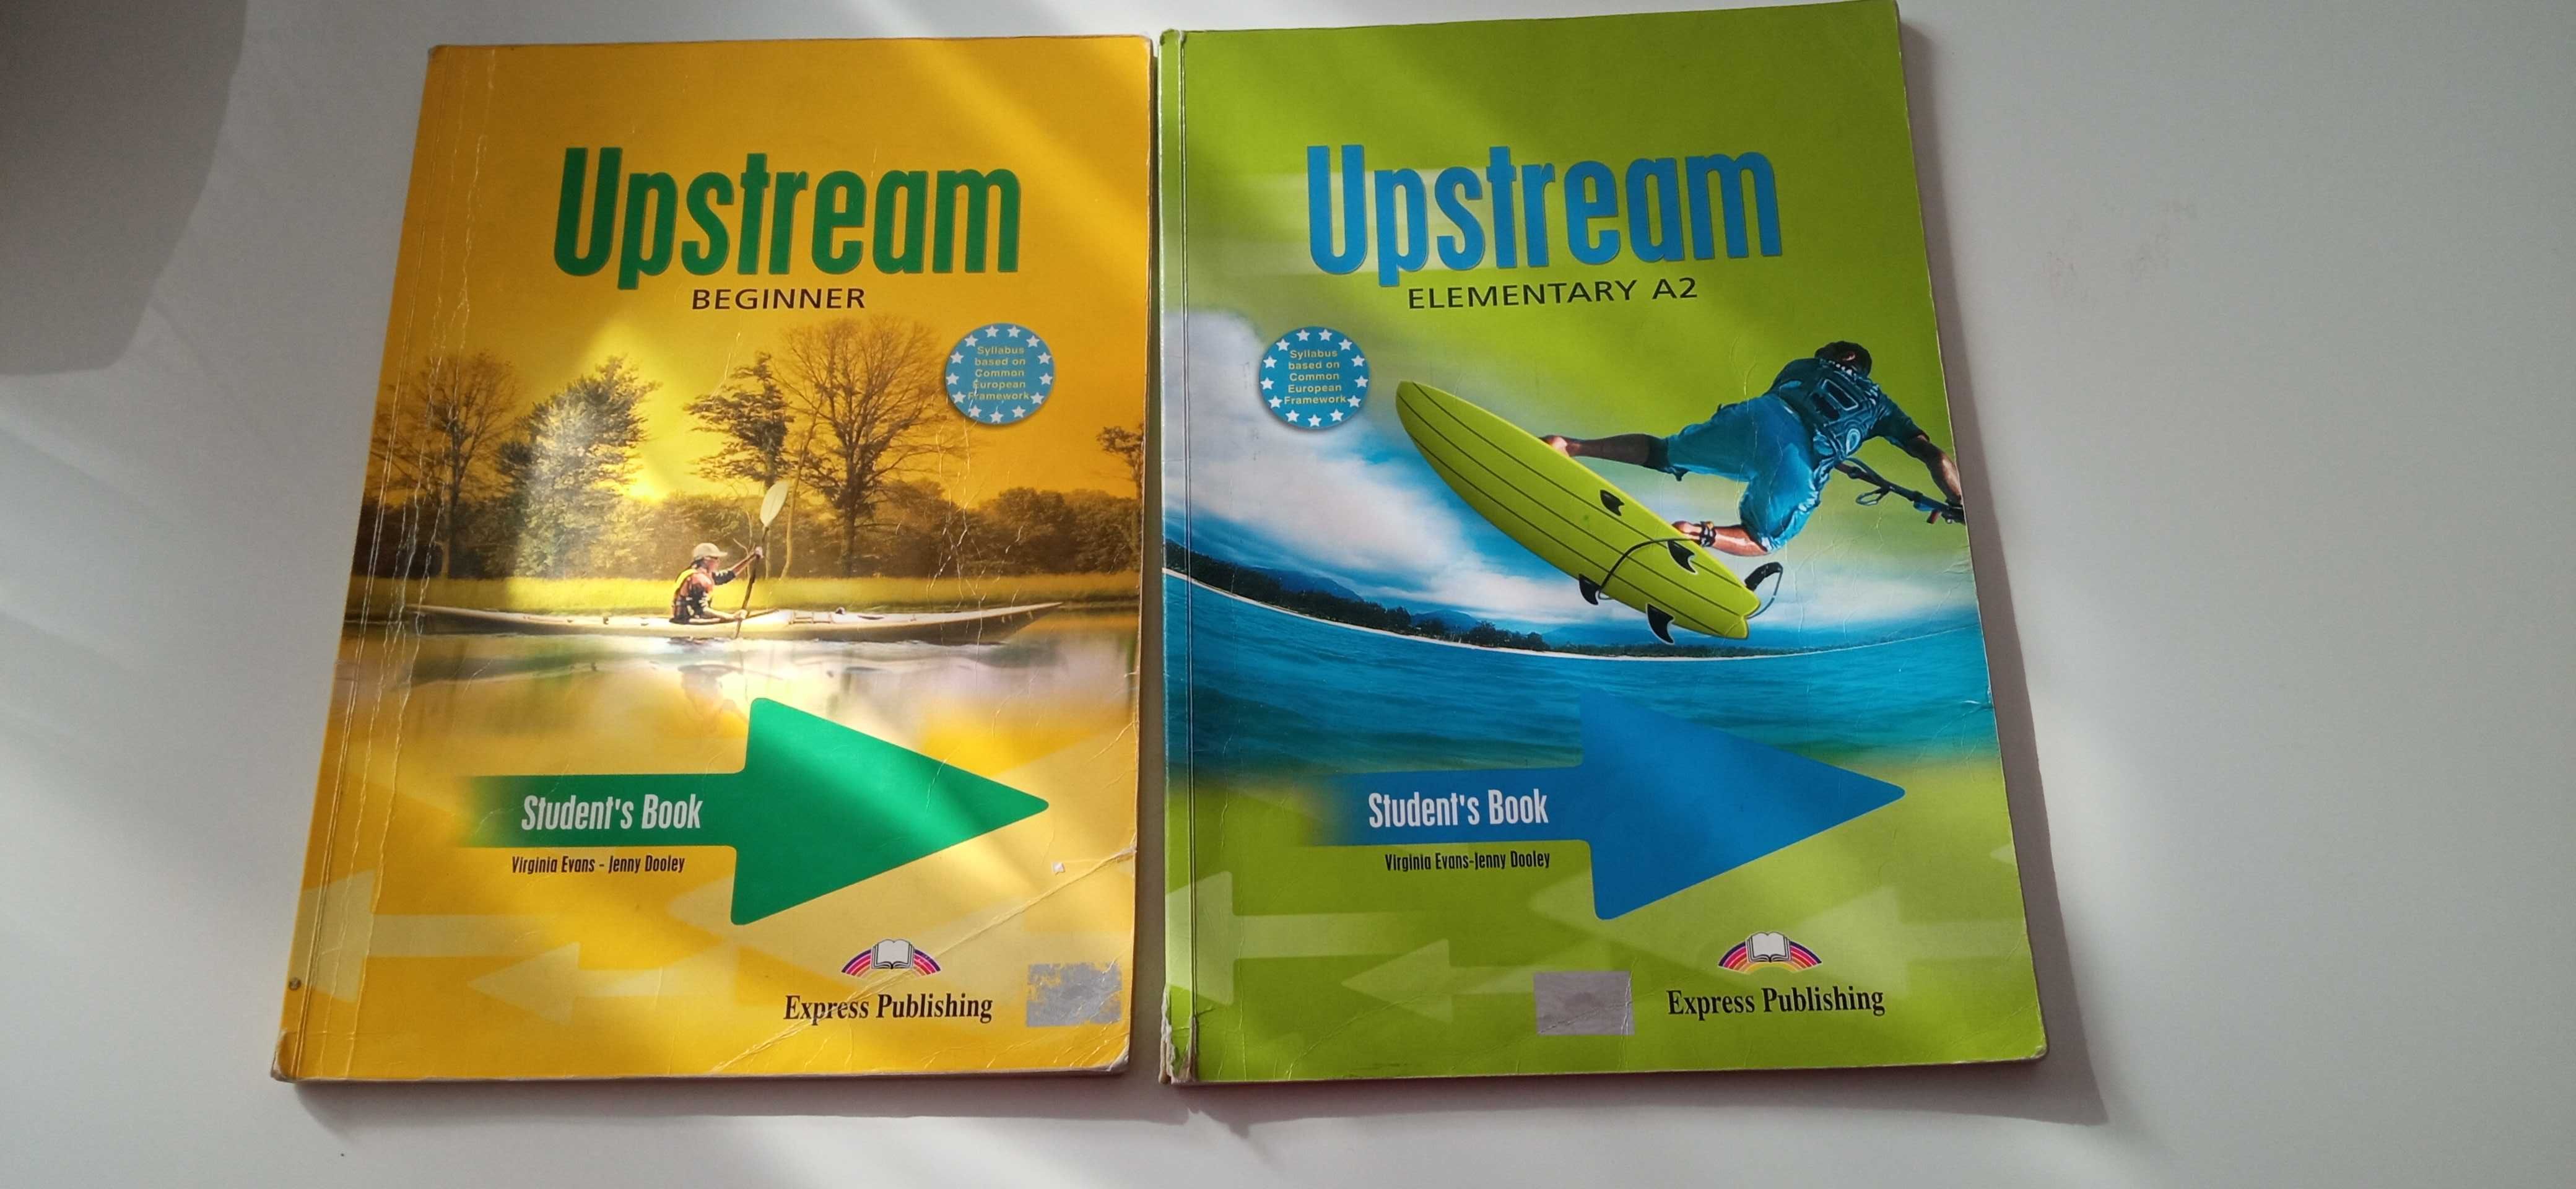 Upstream Beginner Student's book + upstream elementary angielski